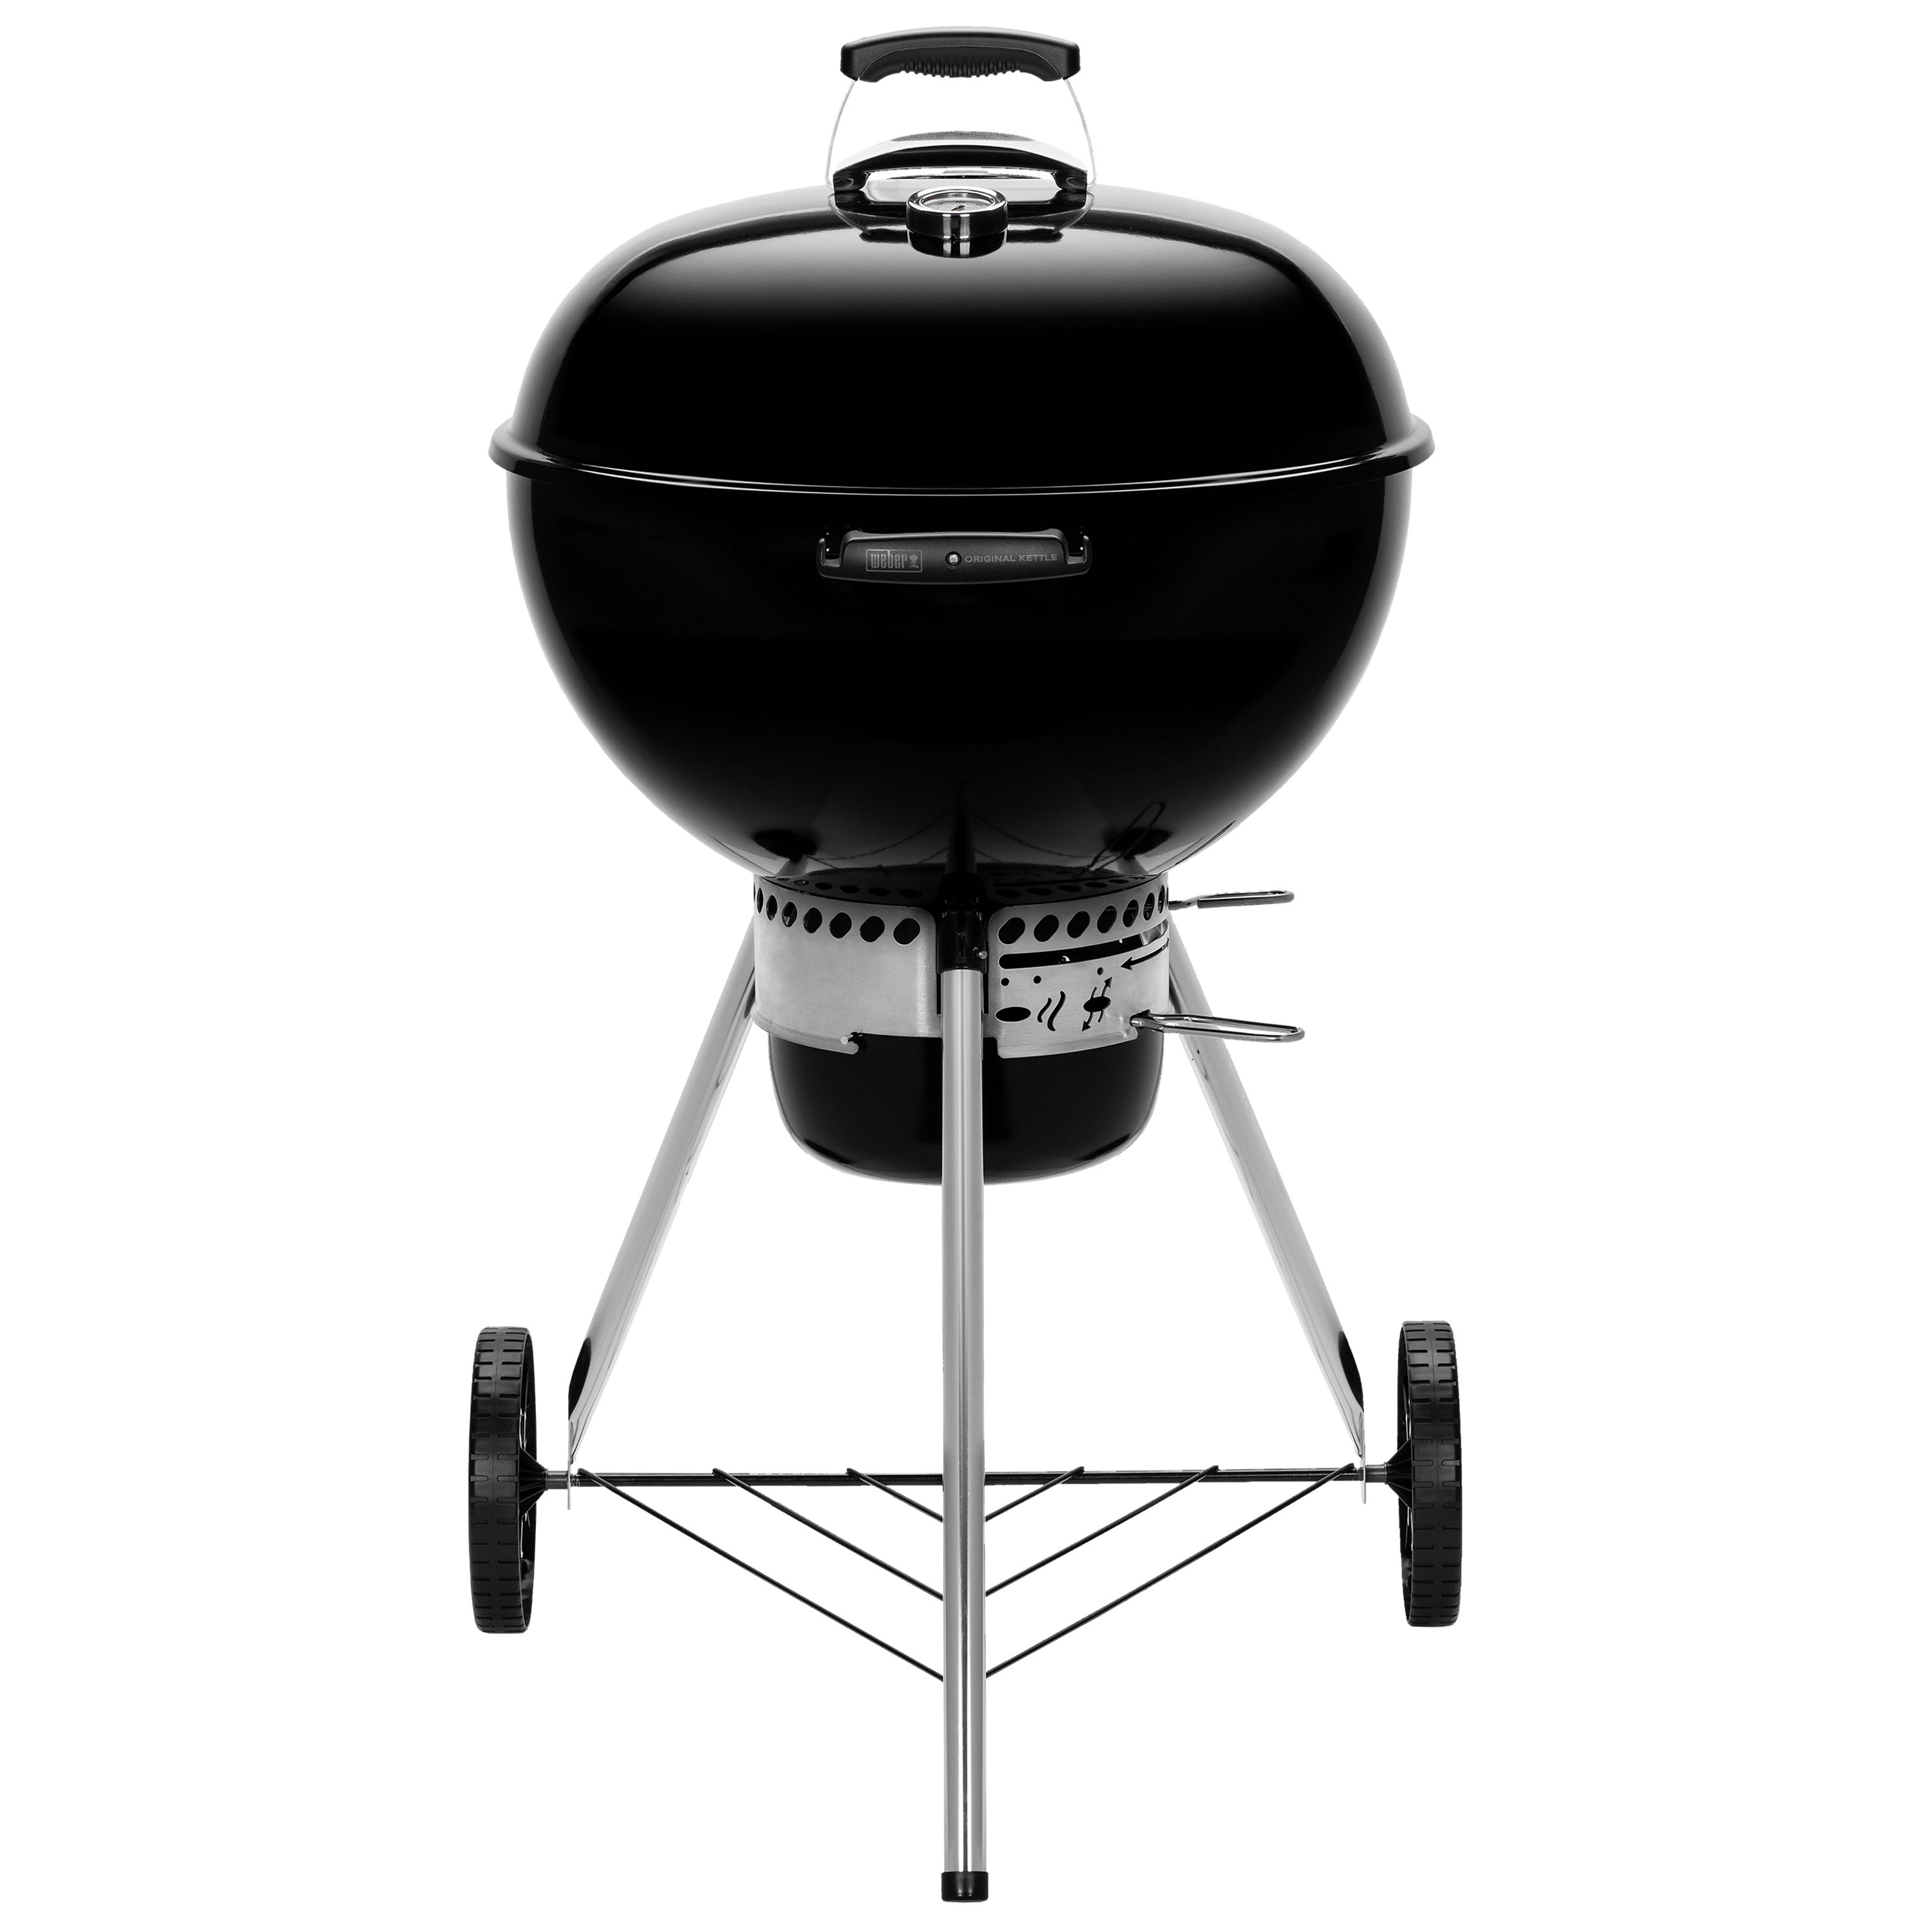 Weber Original E5730 Black Charcoal Barbecue